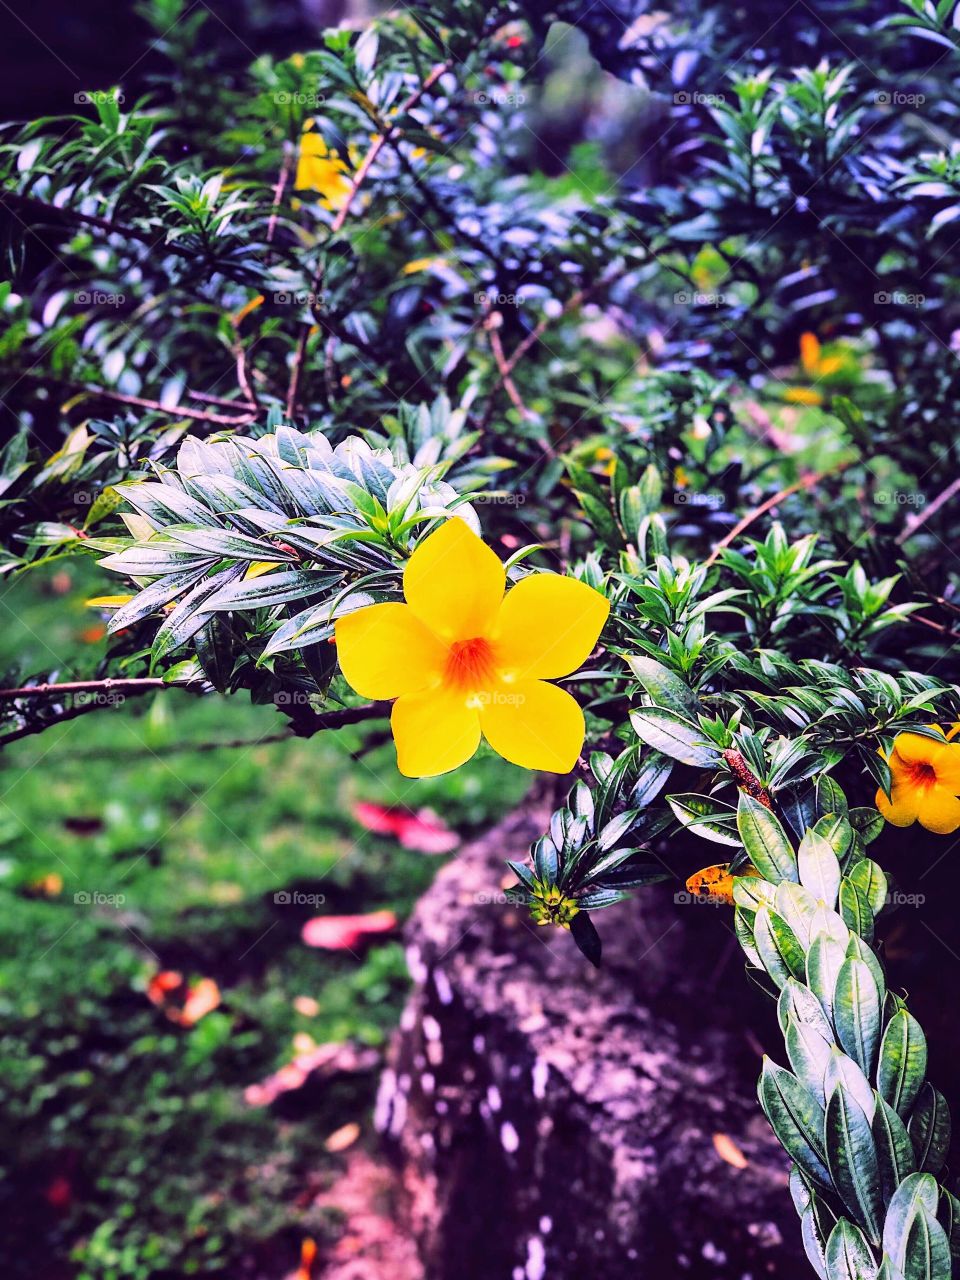 The prettiest yellow flower